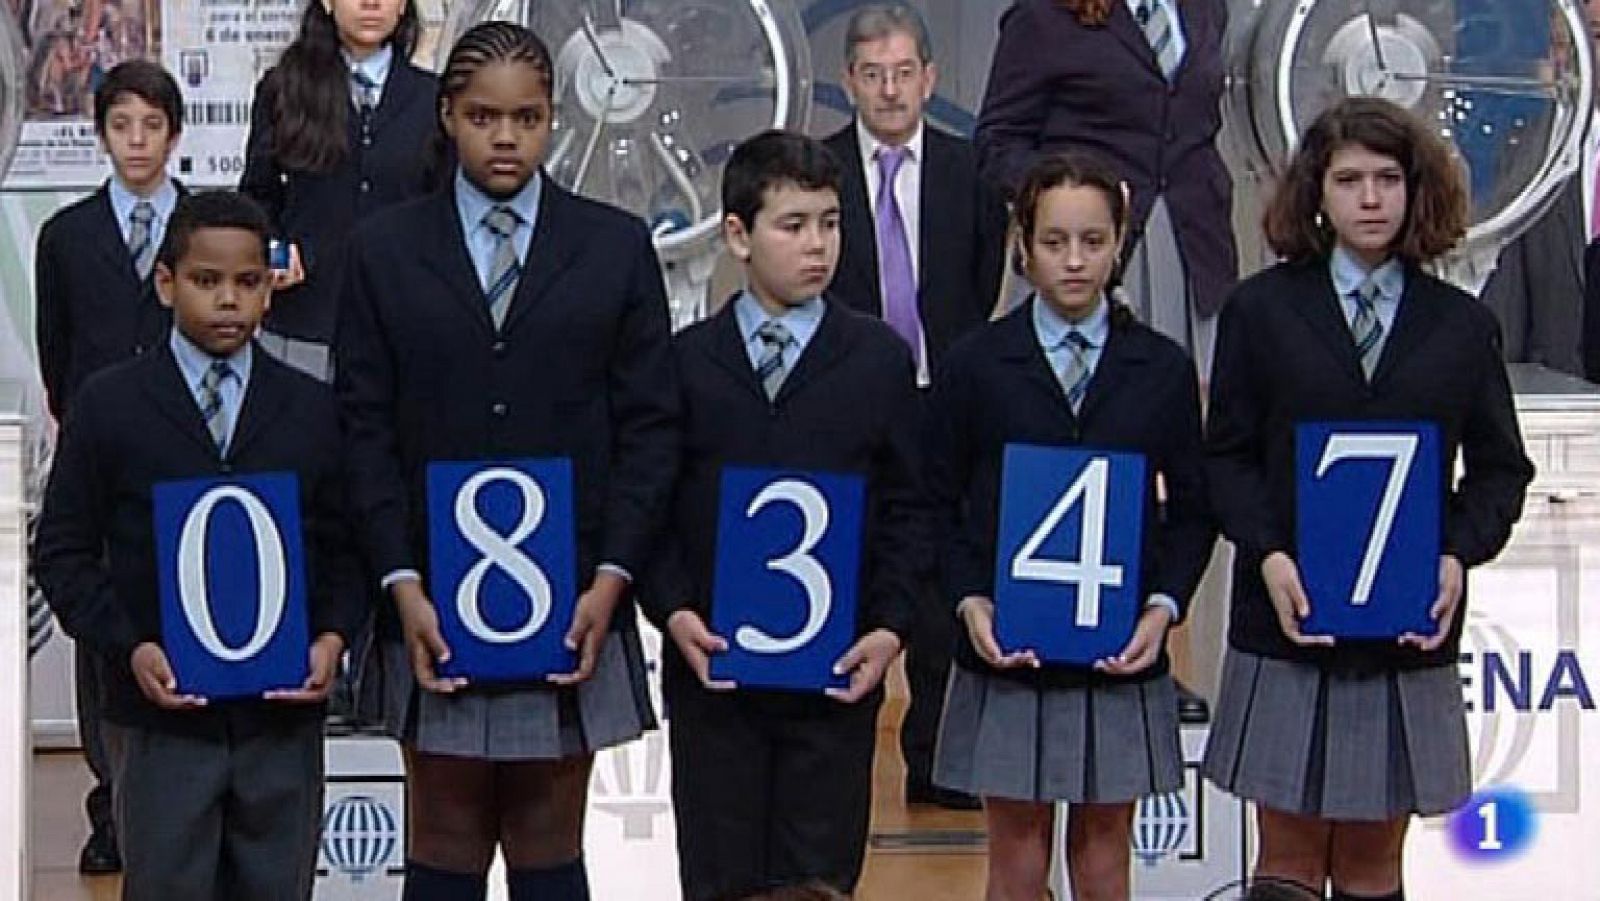 8.347, tercer premio del Sorteo del Niño 2014 | RTVE.es